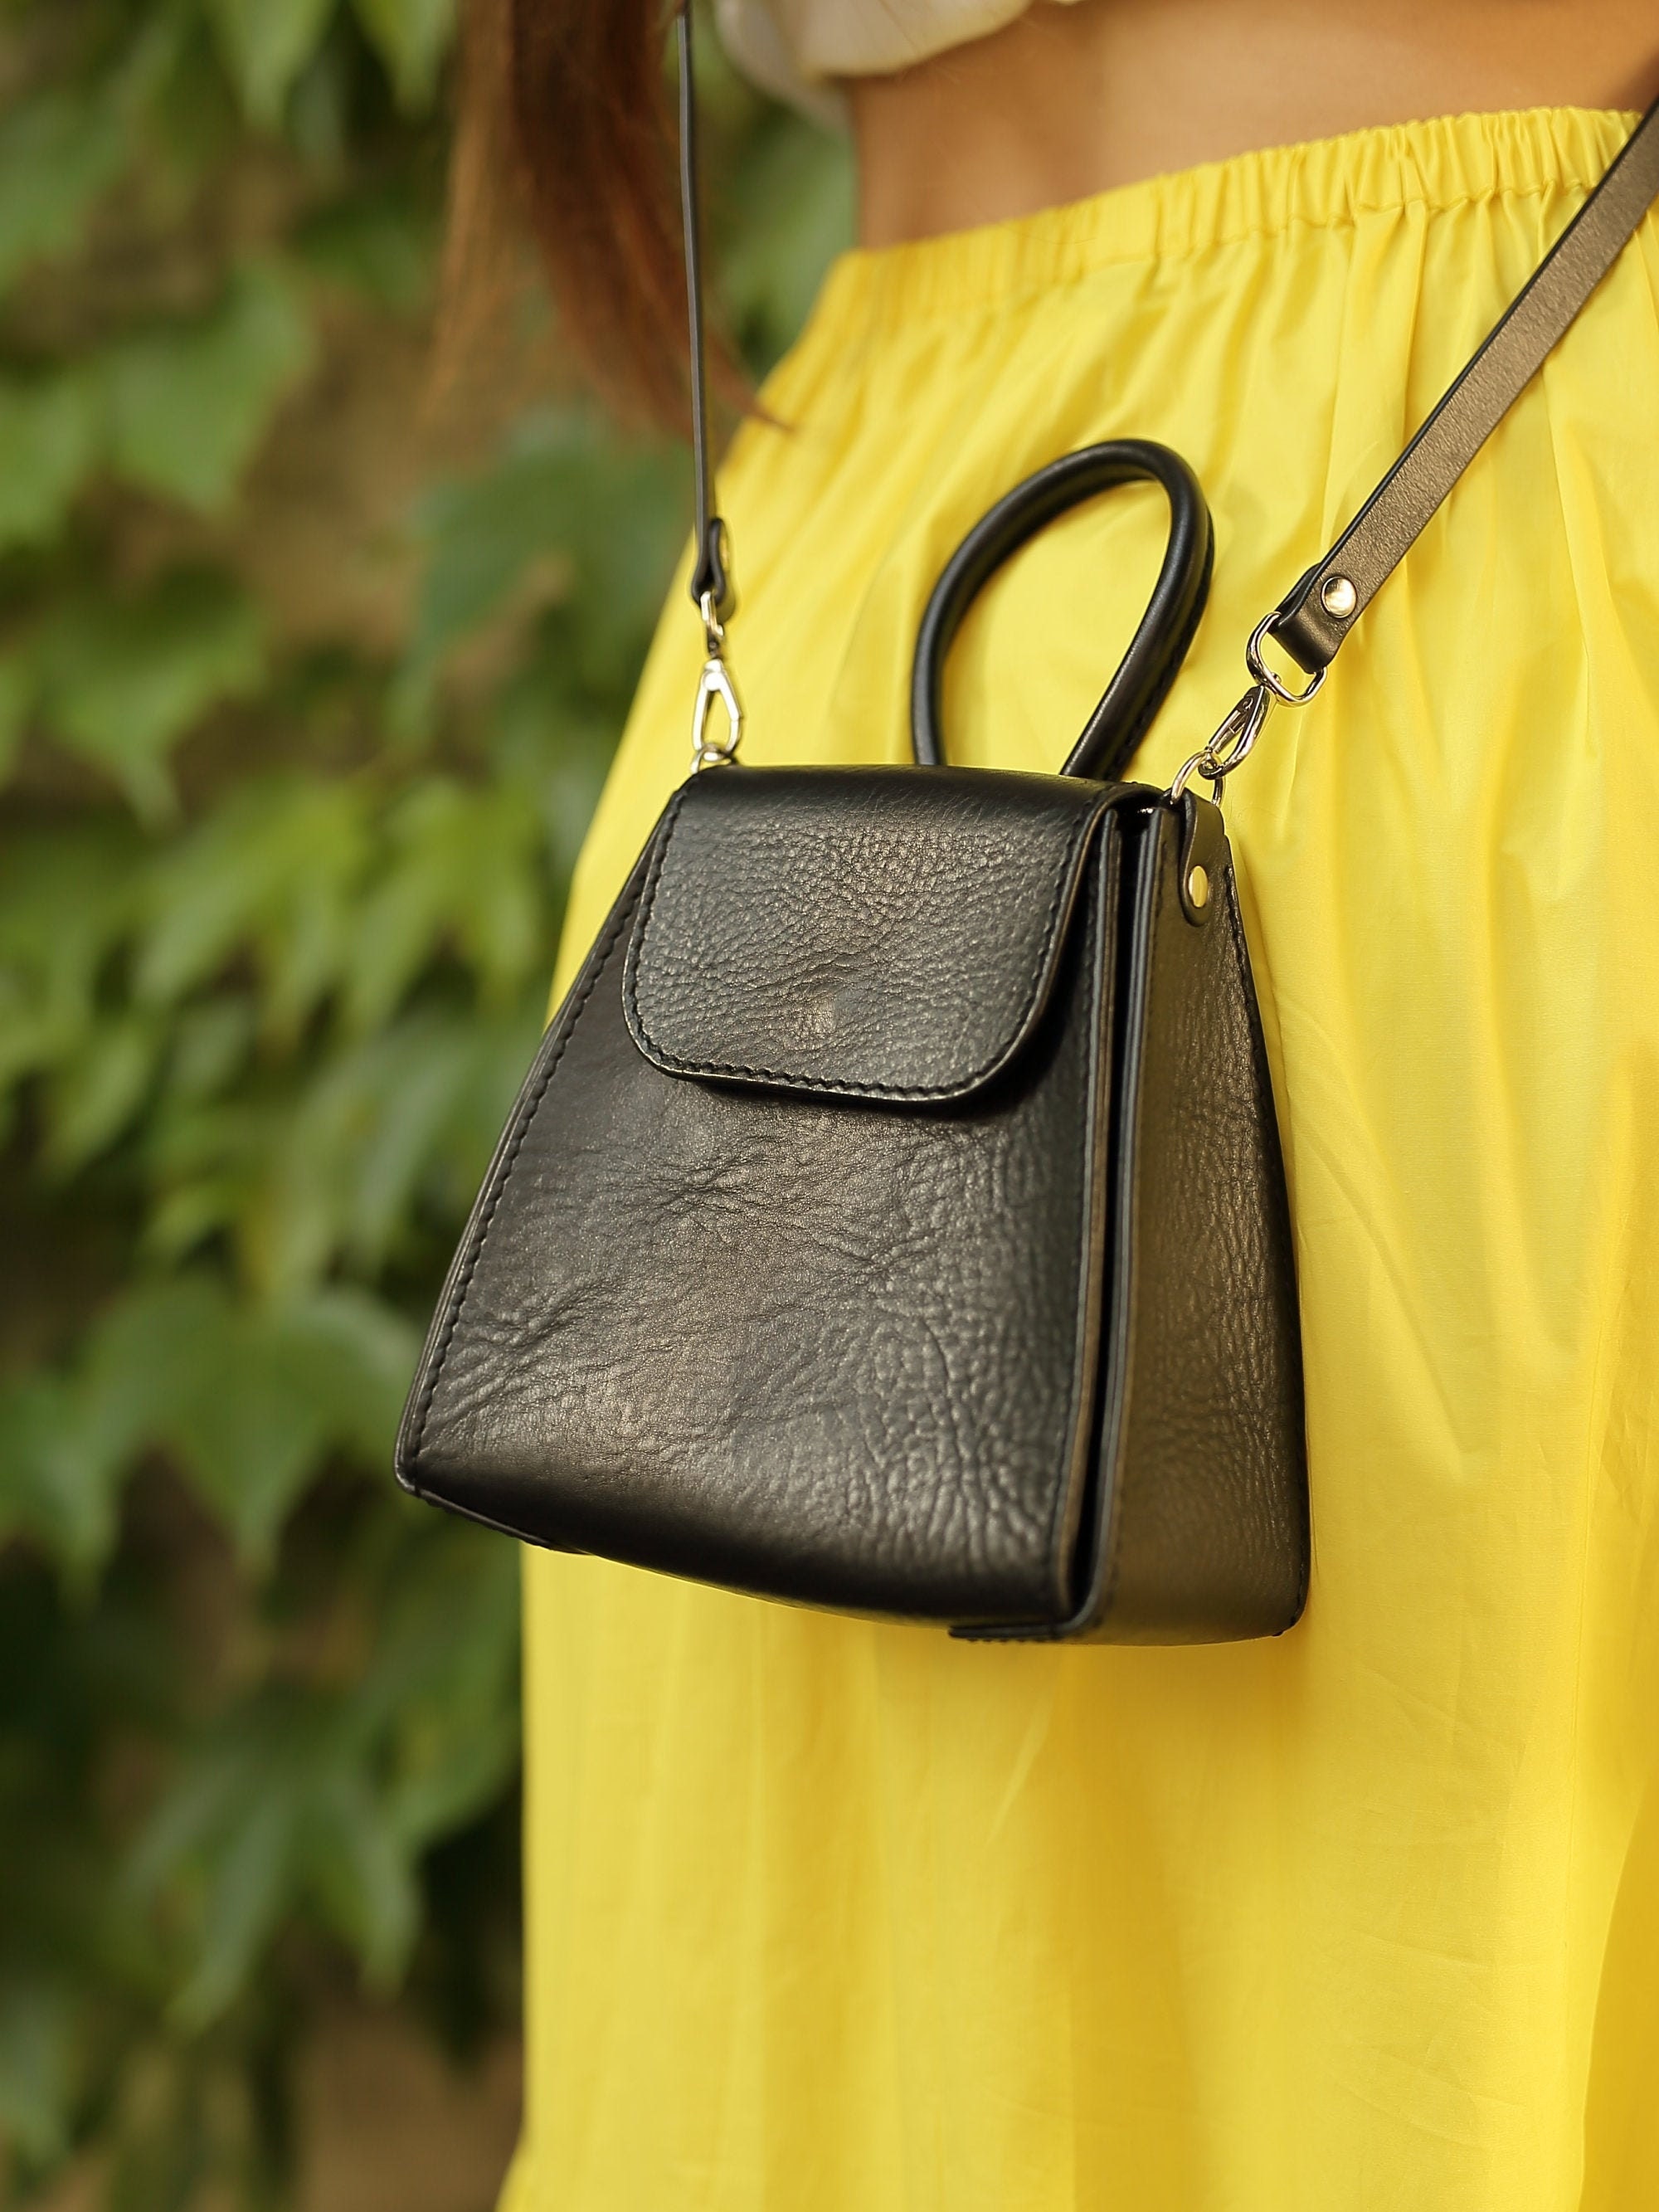 Crossbody Bag for Women Small Black Leather Cross Body Bag 